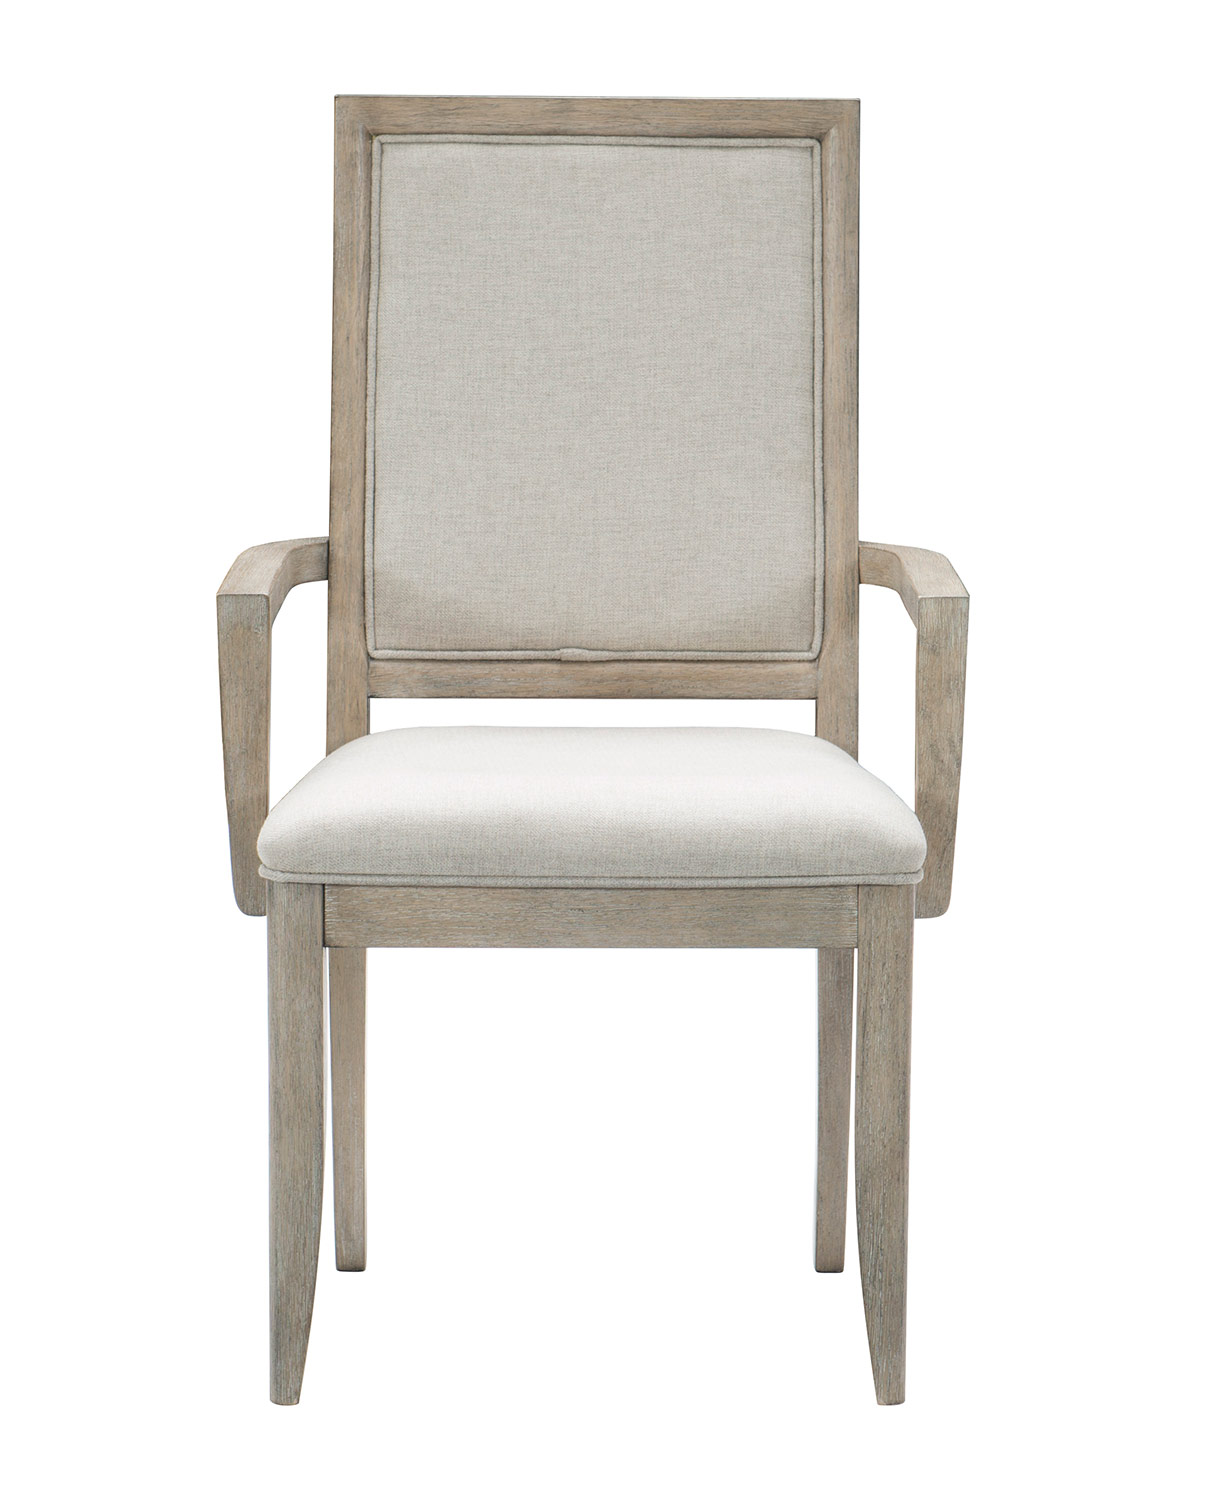 Homelegance McKewen Arm Chair - Light Gray